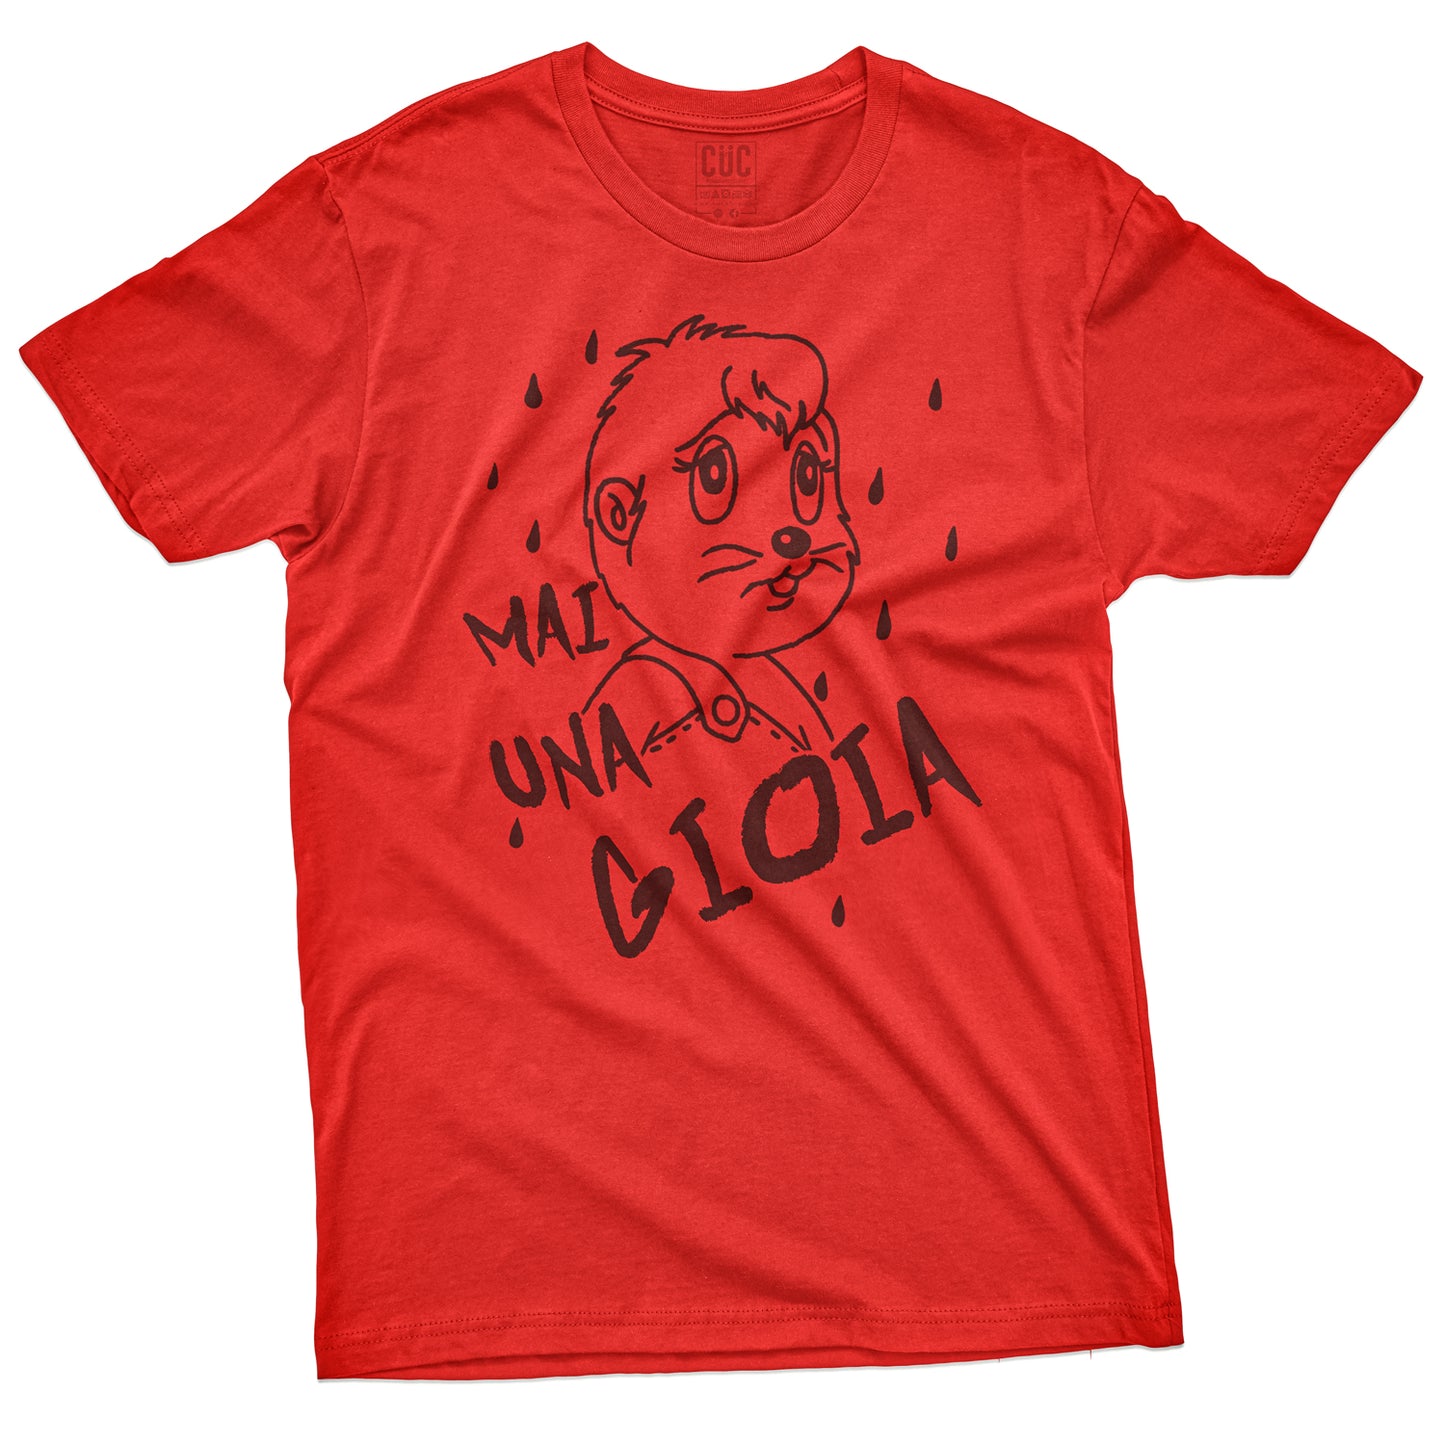 CUC T-Shirt DON CHUCK - Castoro -  Mai una Gioia - Piovemm*rda  #chooseurcolor